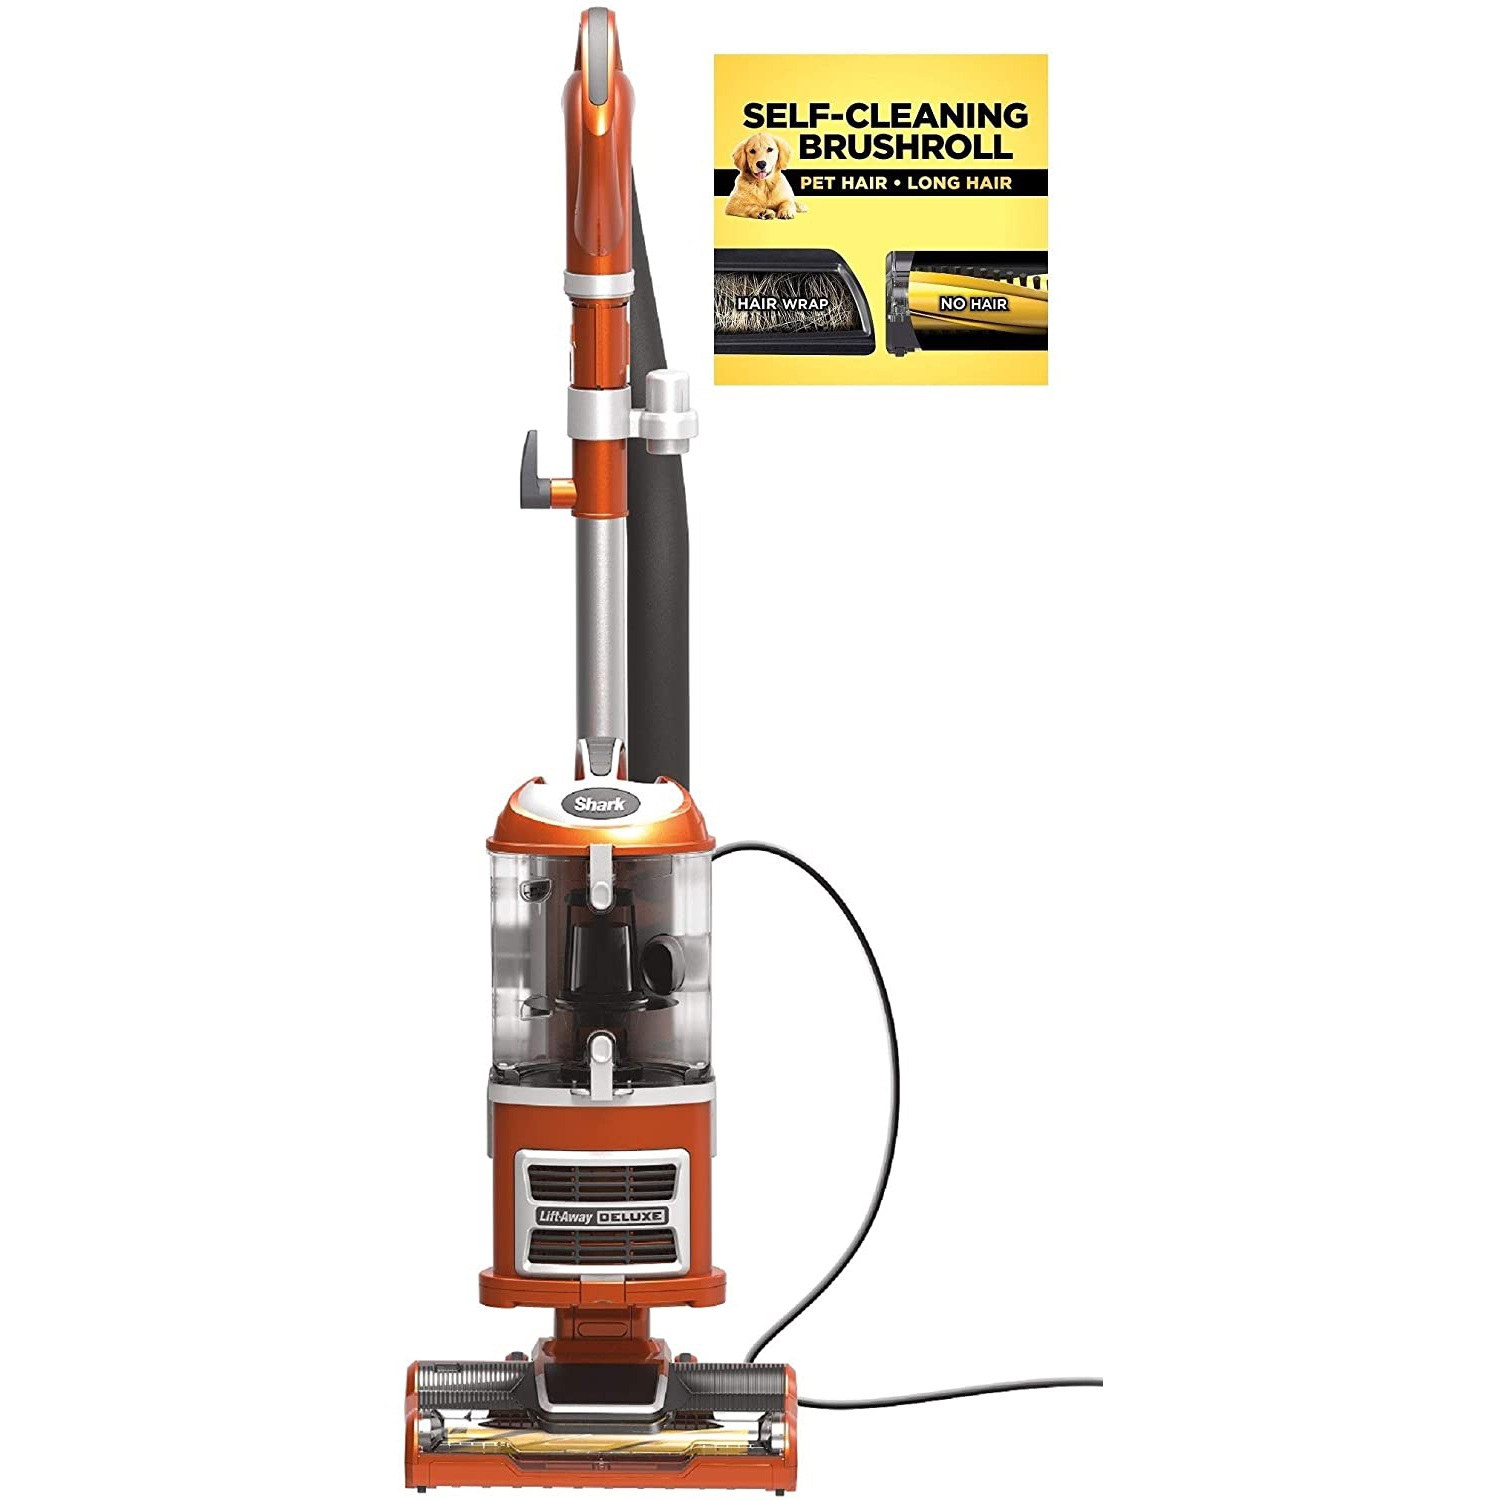 Shark Navigator CU500 Lift-Away Upright Vacuum w/ Self-Cleaning Brushroll (Factory refurb w/ Extra Warranty) $90 (or less w/ SD Cashback) + free s/h